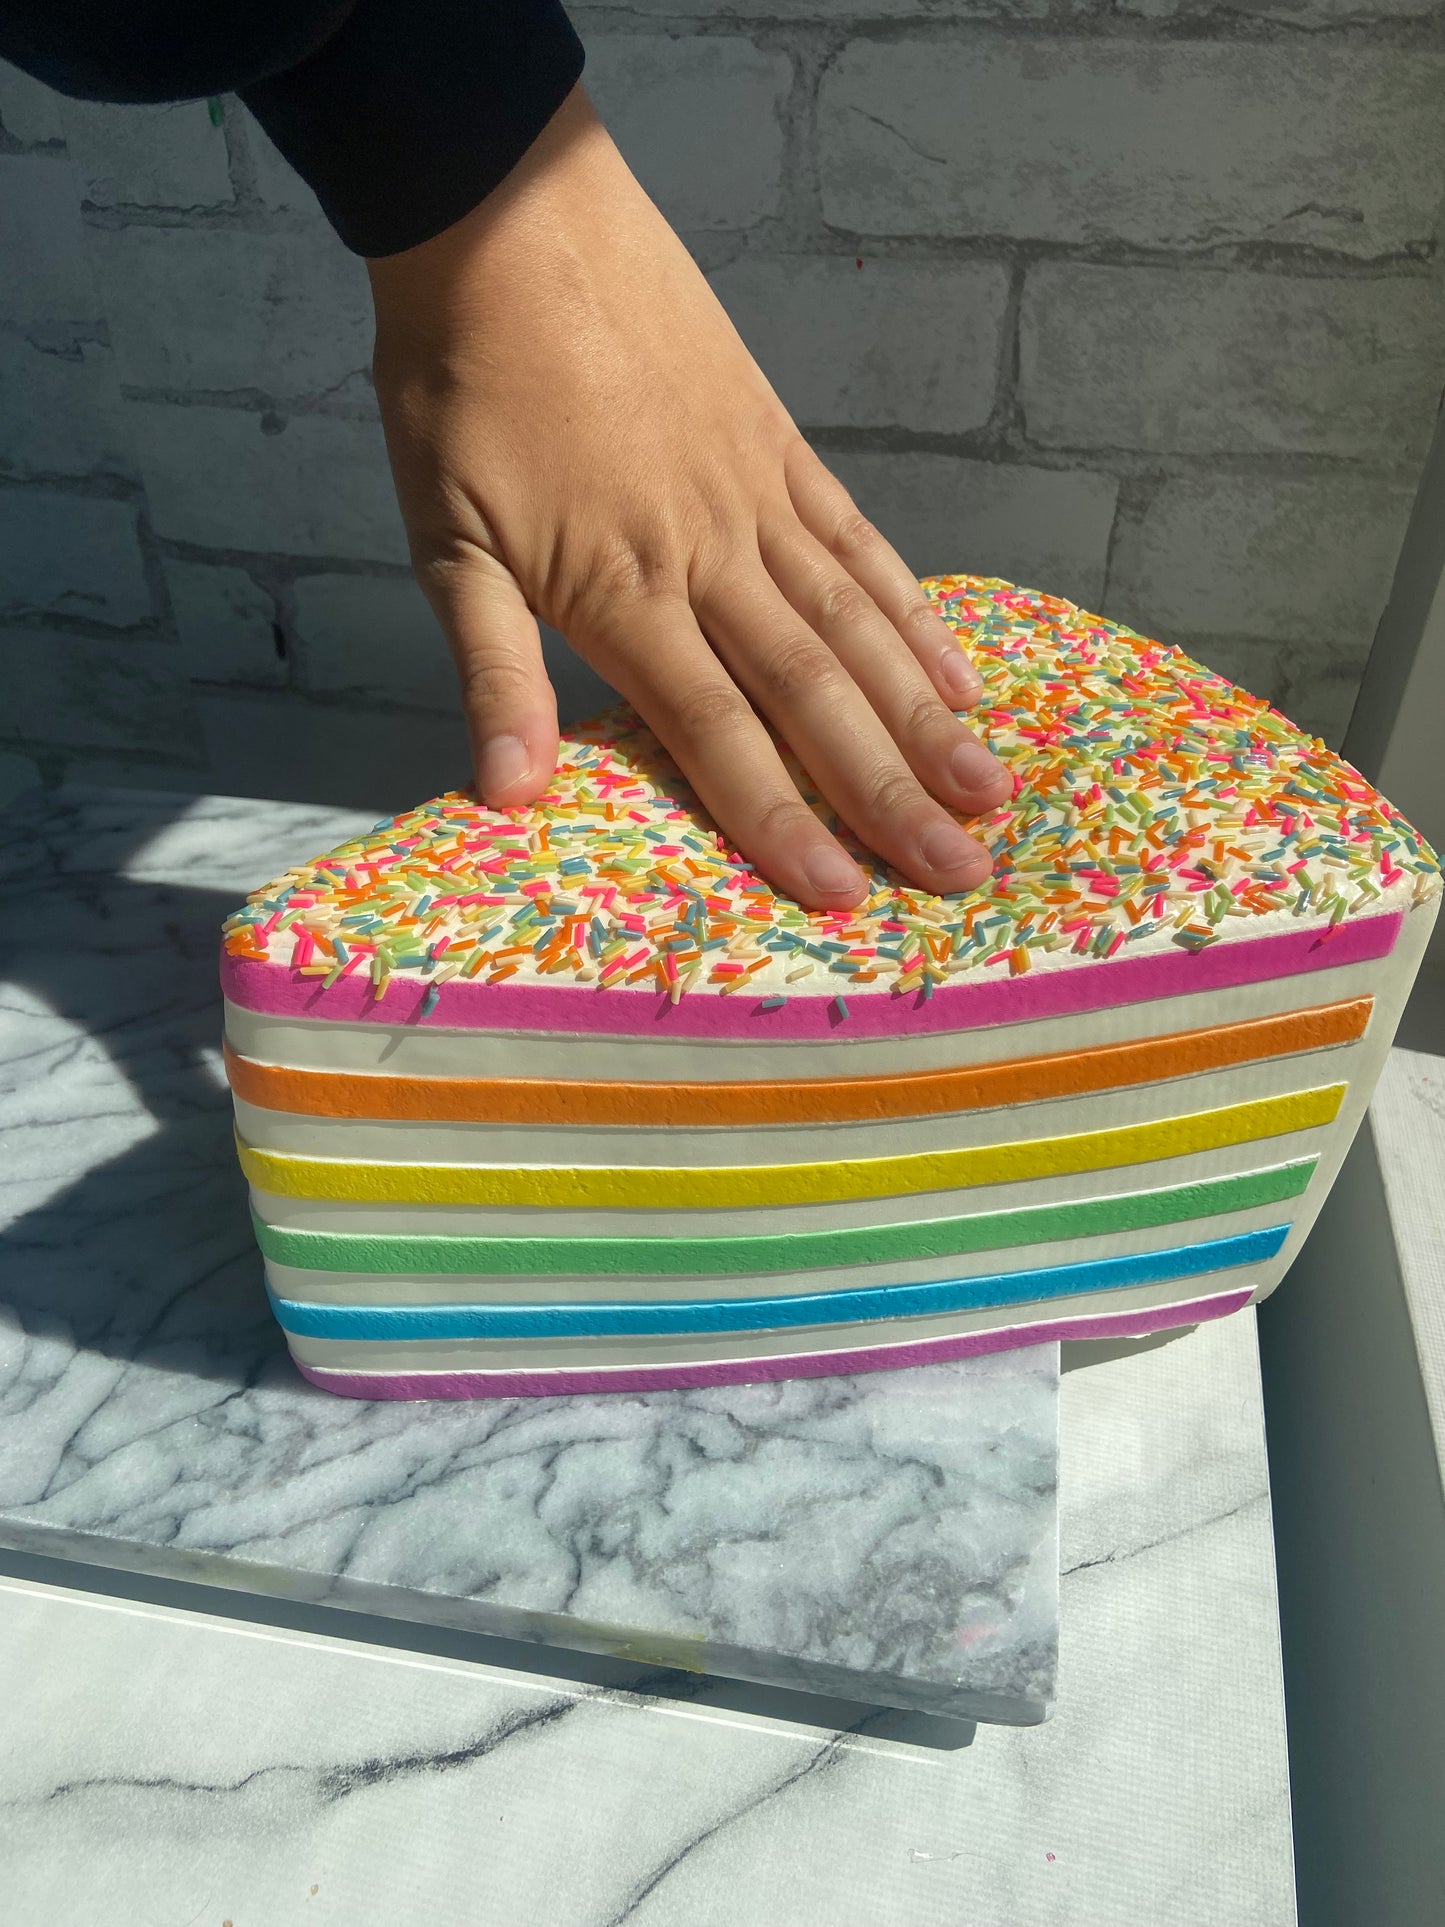 Jumbo Rainbow Cake Squishy 9 x 5 inches (HUGE)